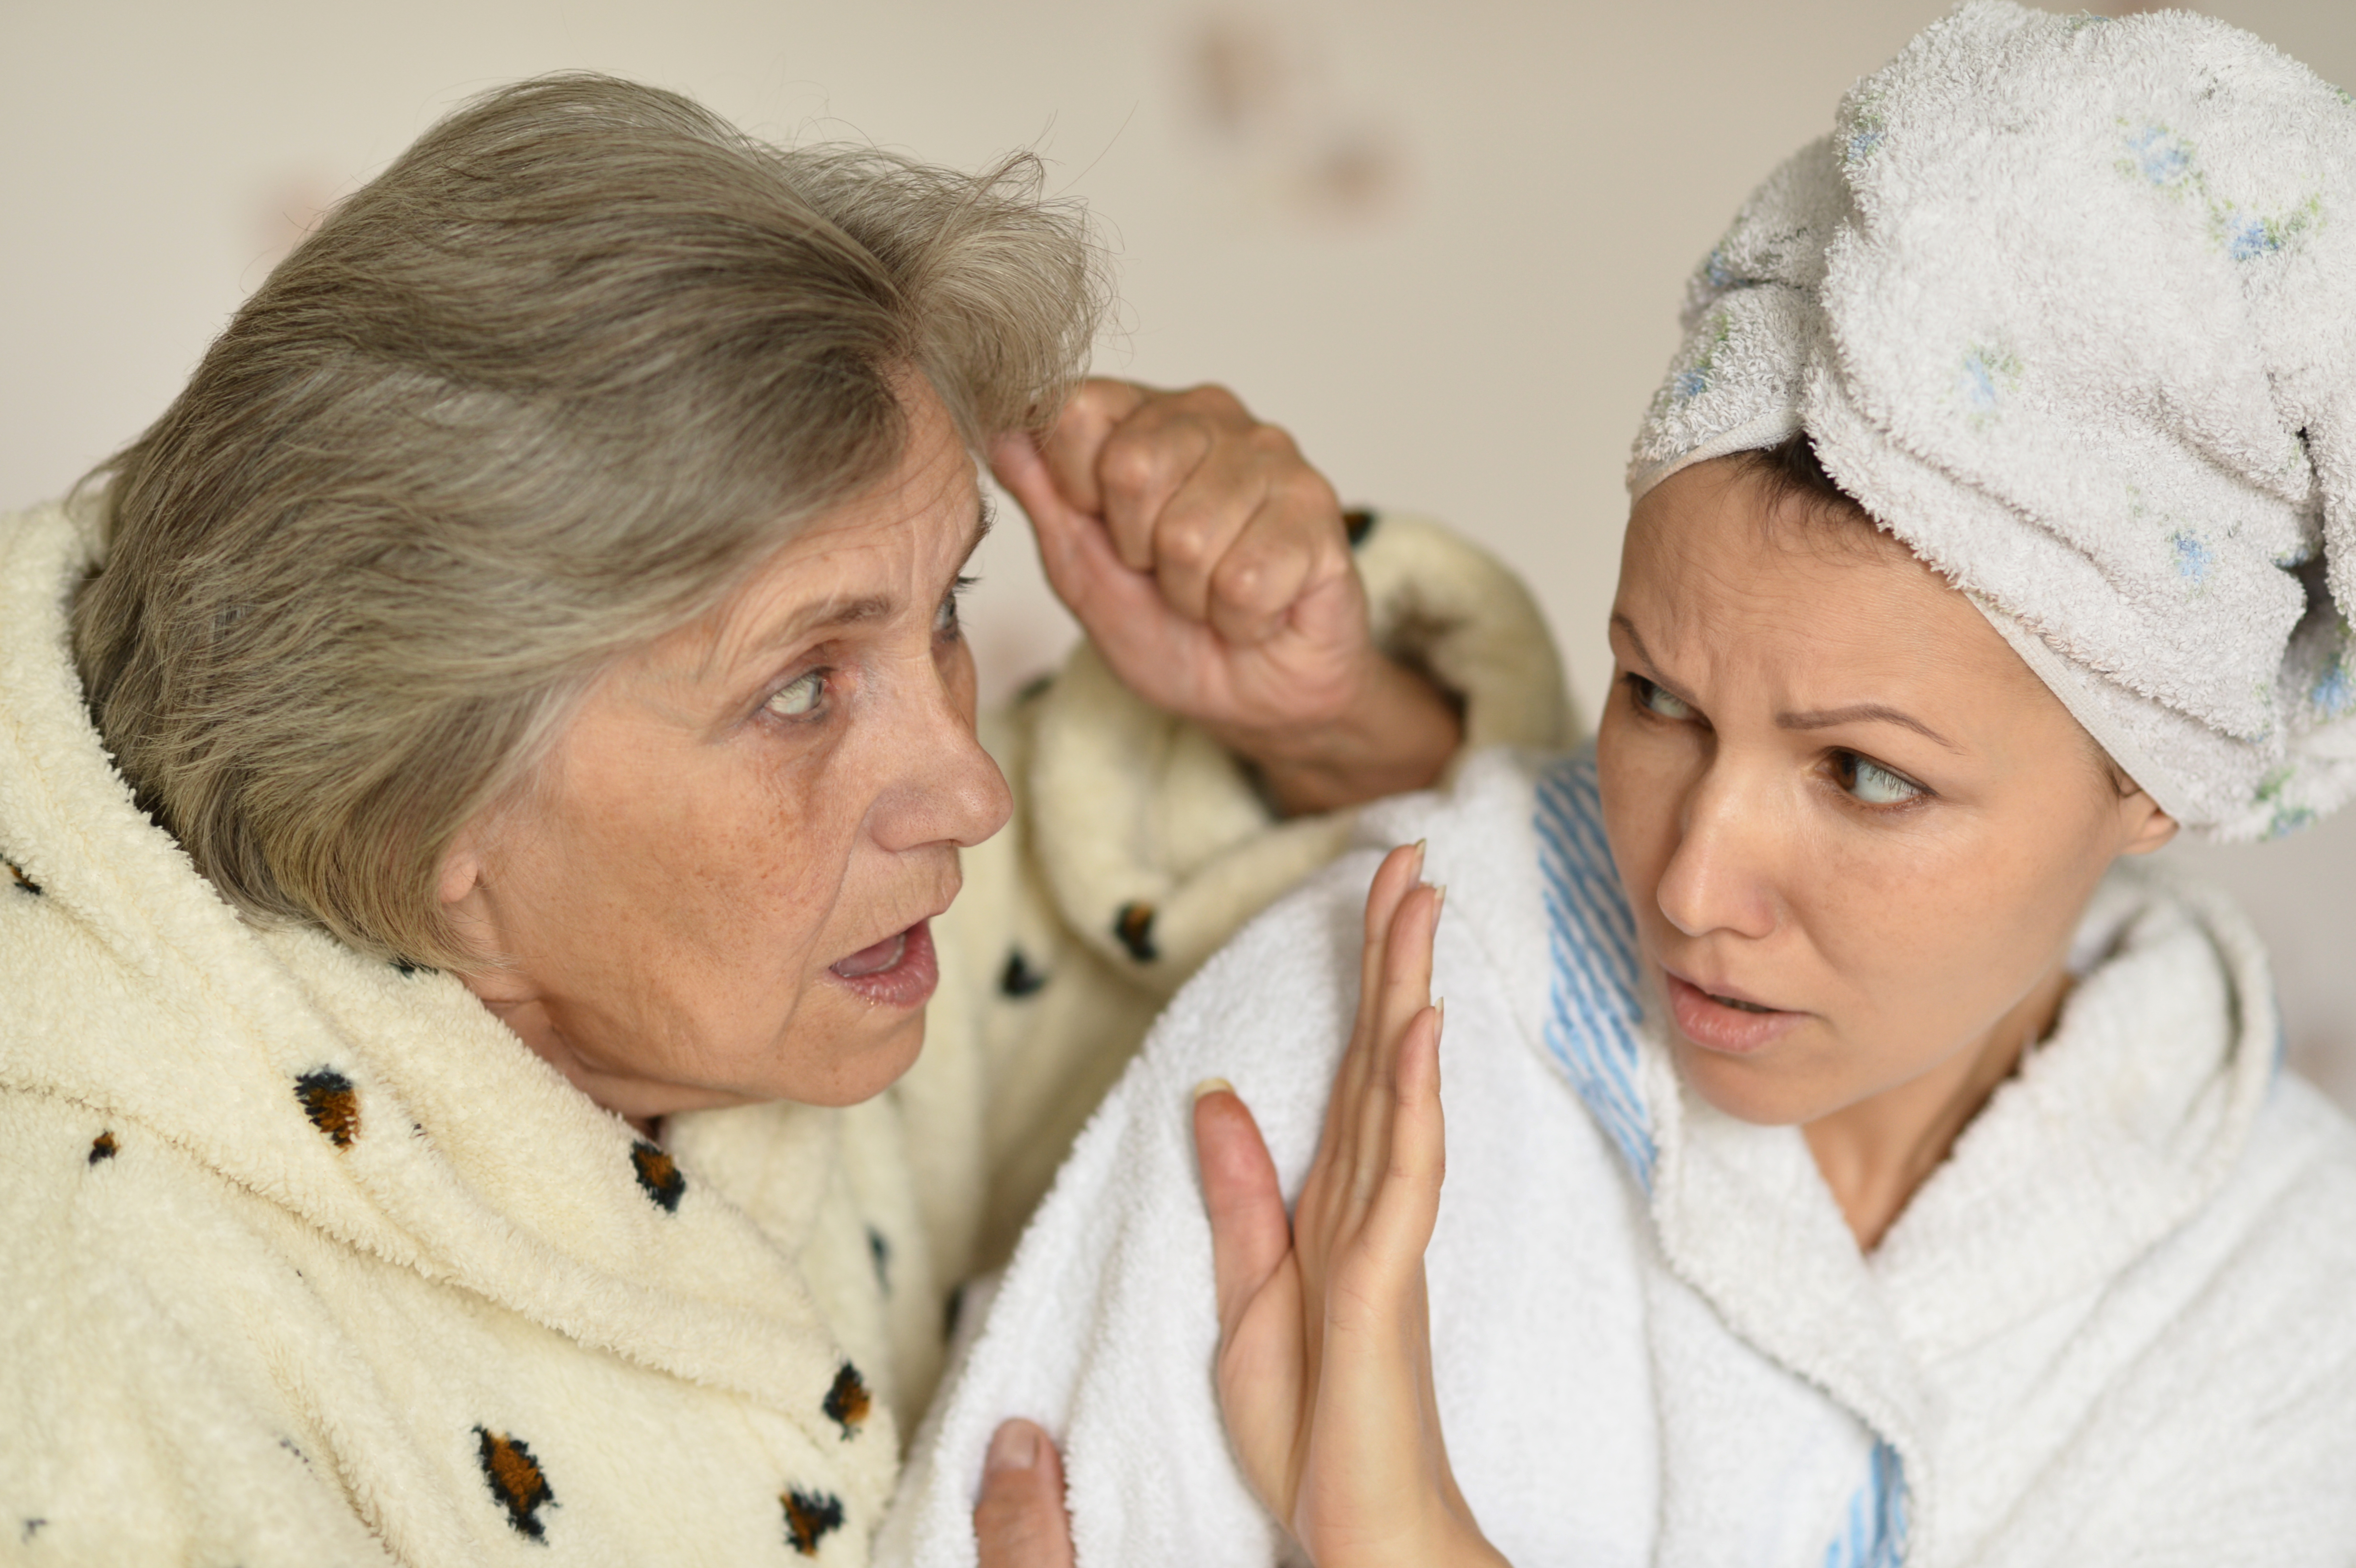 An older woman is seen scolding a younger woman | Source: Shutterstock